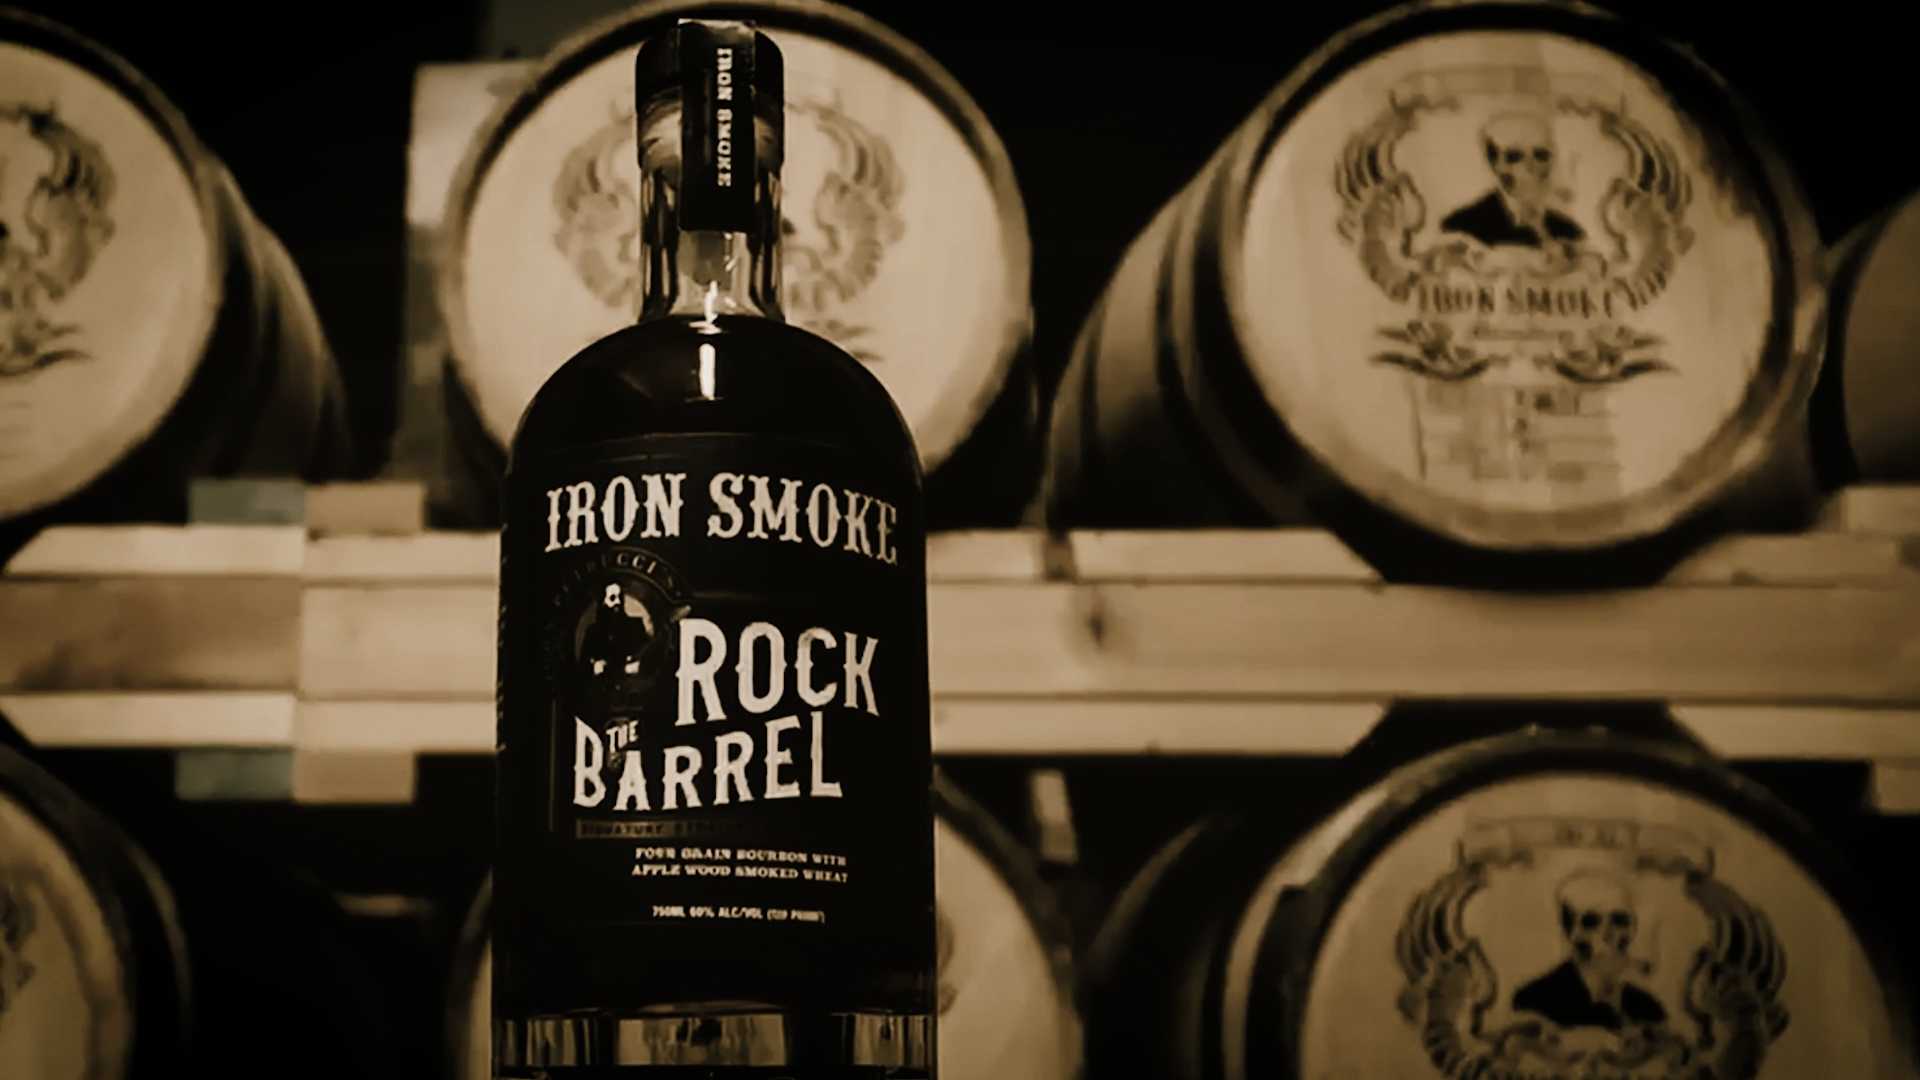 Single barrel
bourbon whiskey